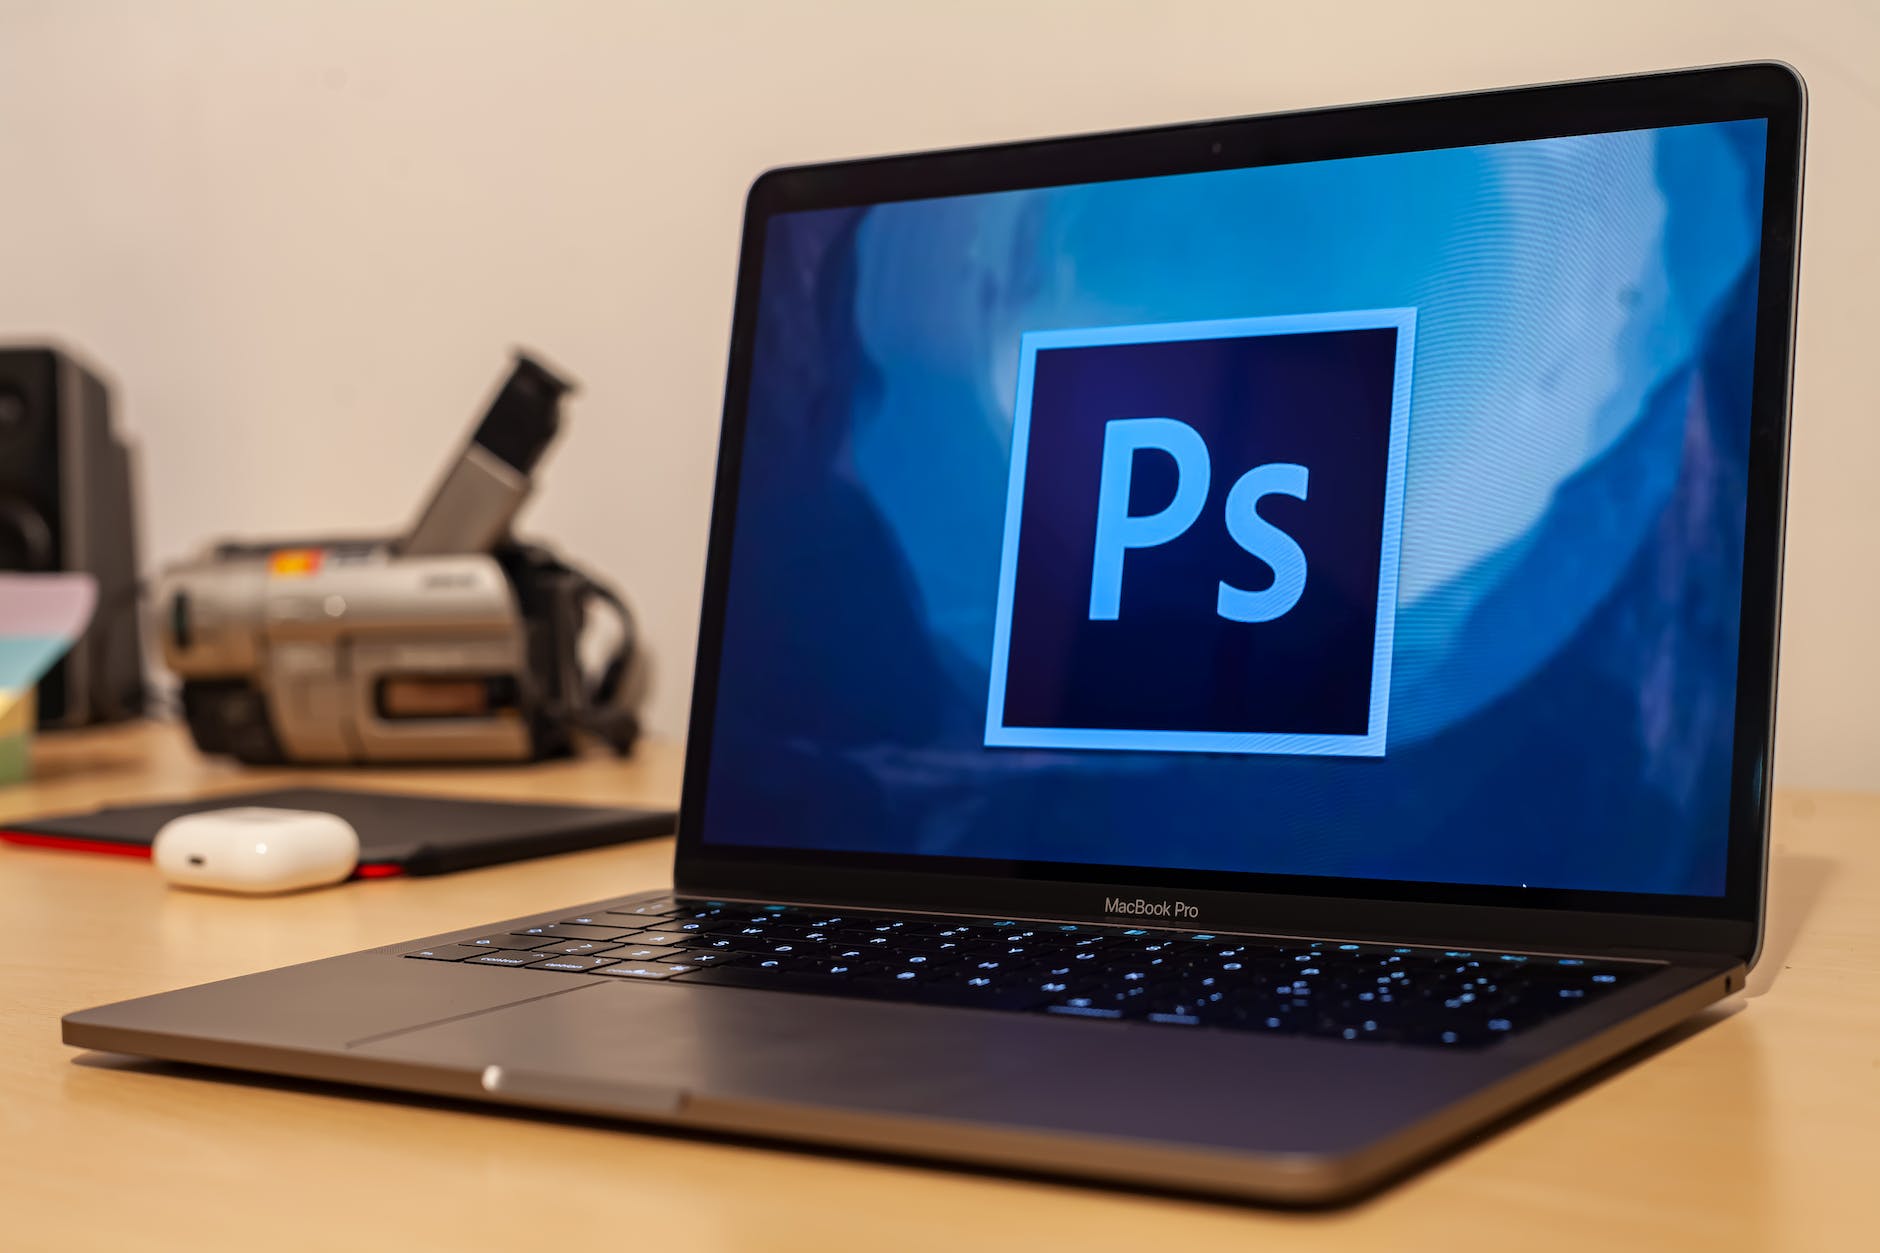 photograph of a macbook pro laptop, Adobe Photoshop